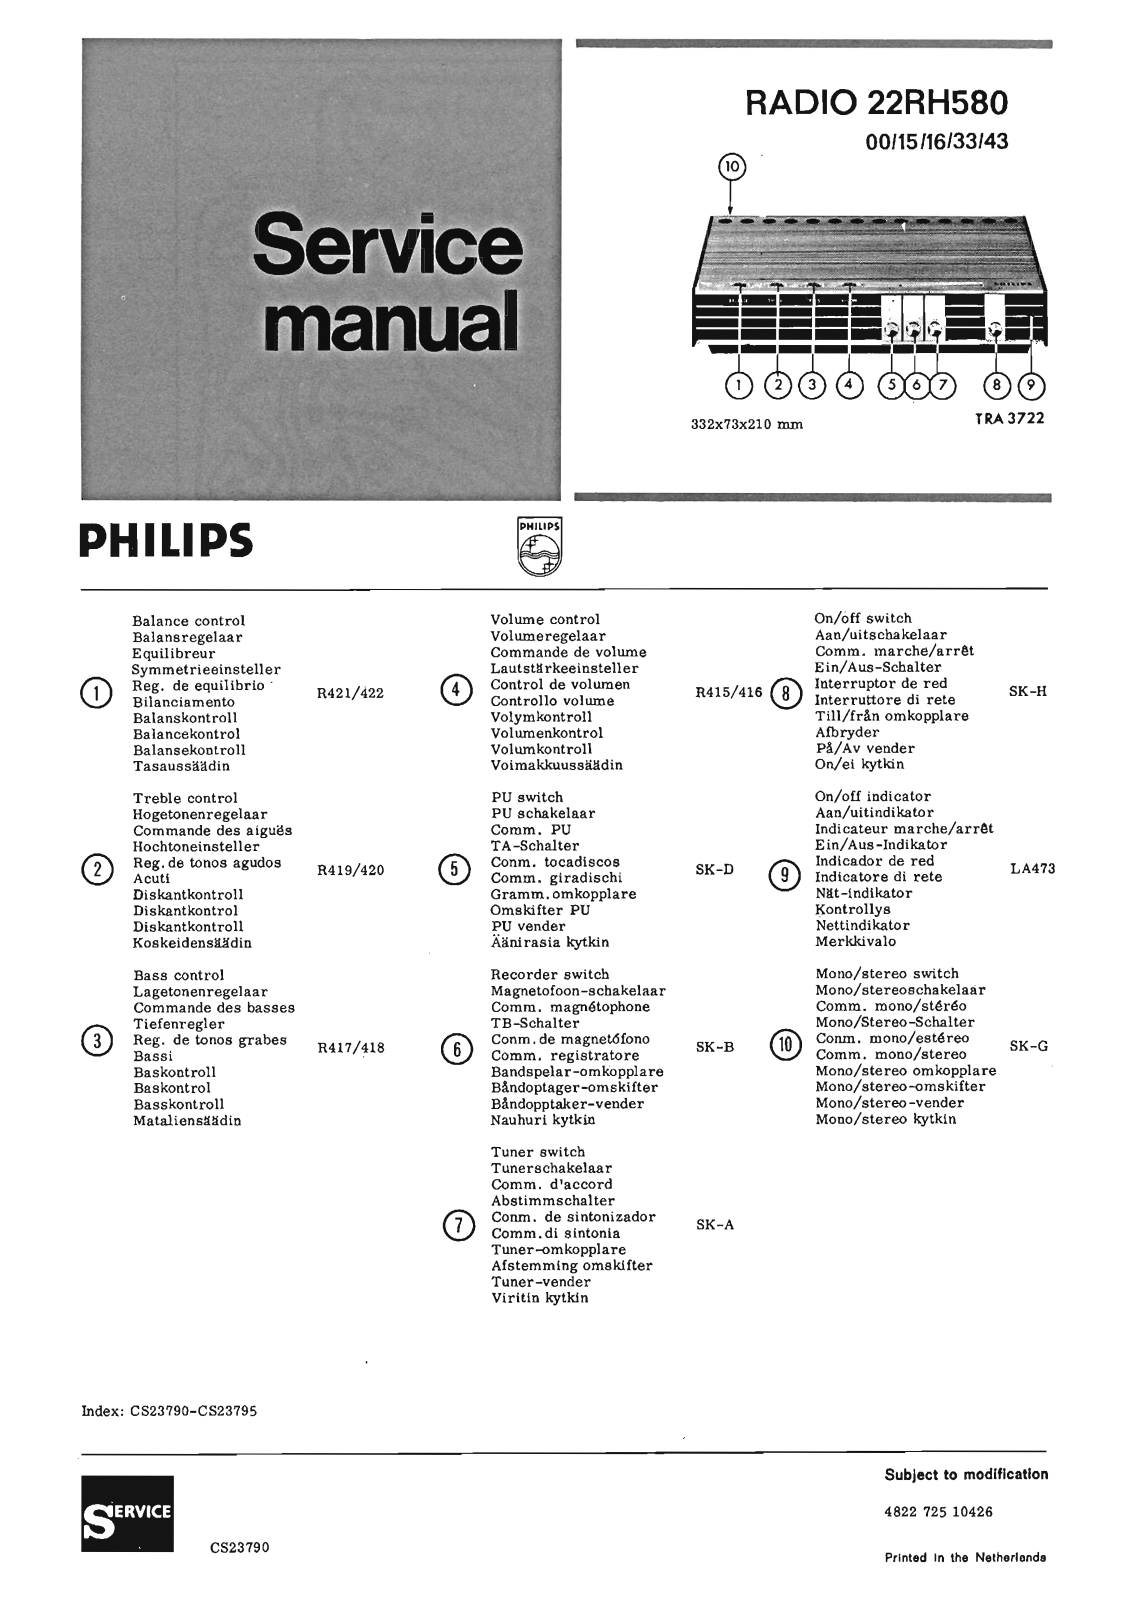 Philips RH-580 Service Manual